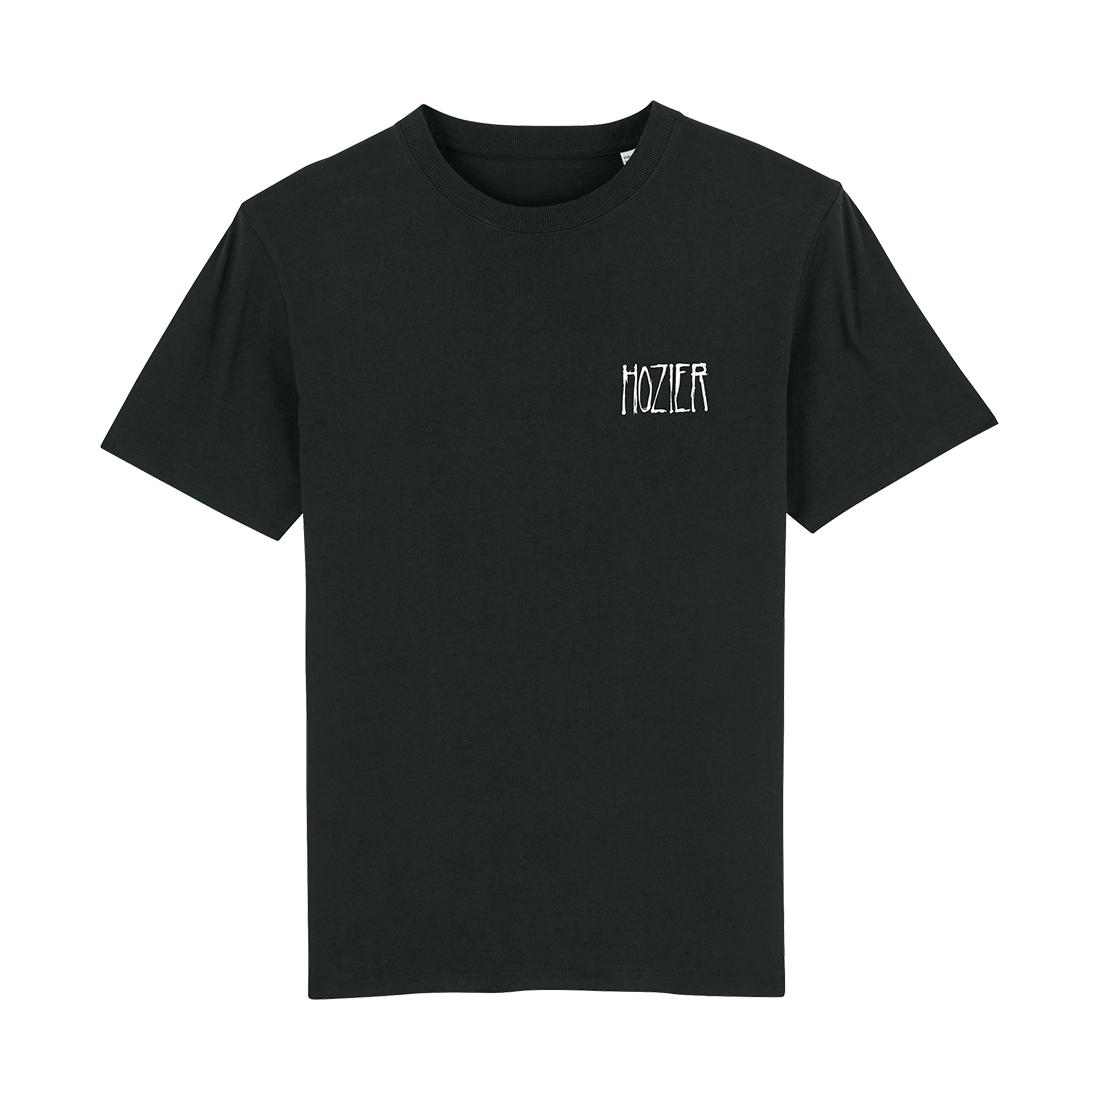 Hozier - Simple Living Things Black Back Print T-Shirt